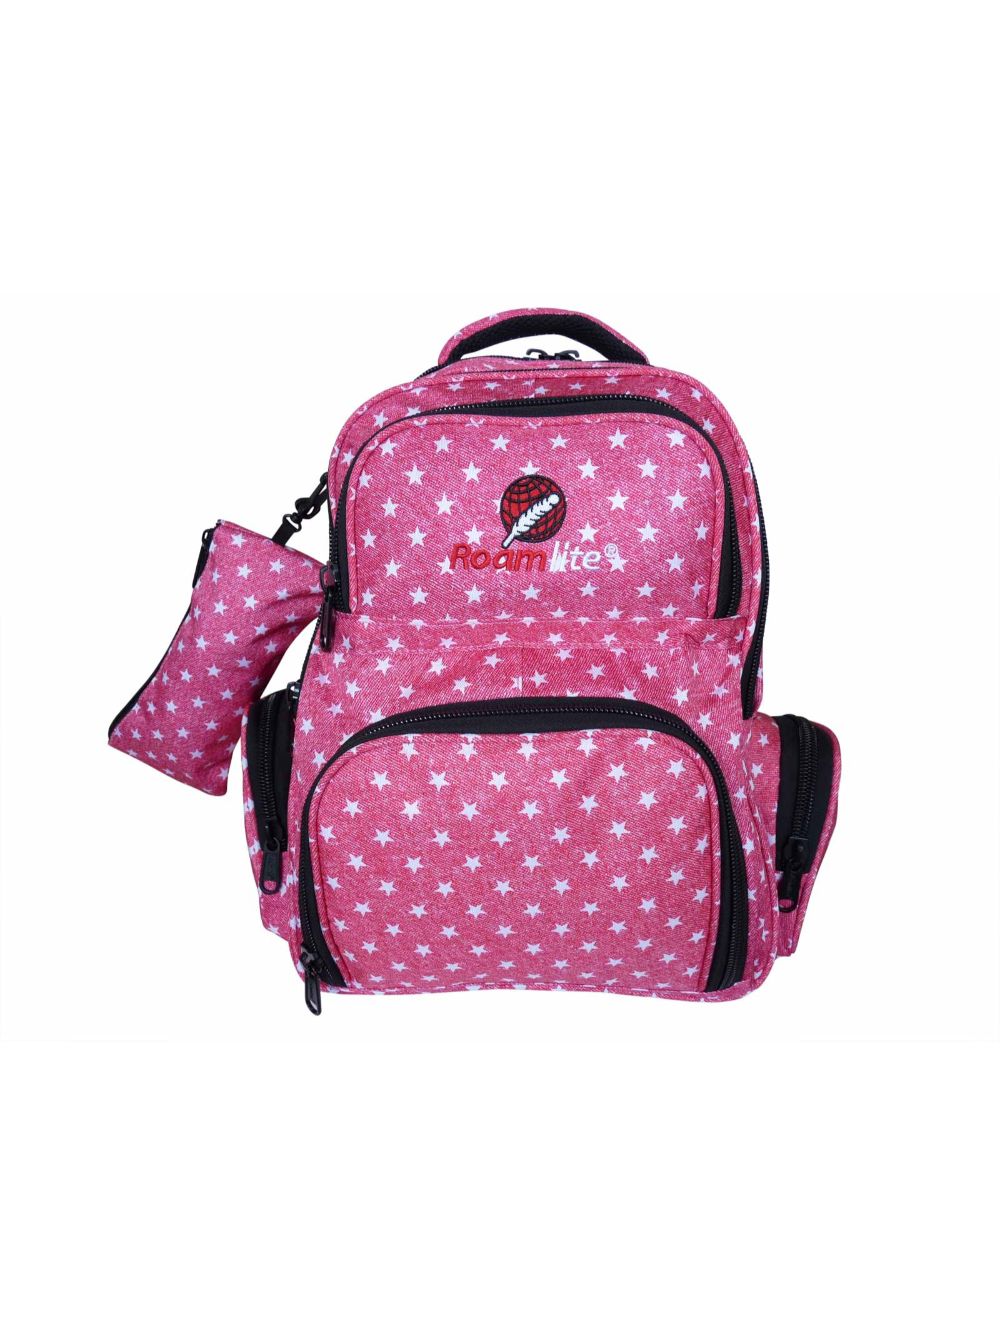 Roamlite Childrens Backpack Pink Star pattern RL840 front